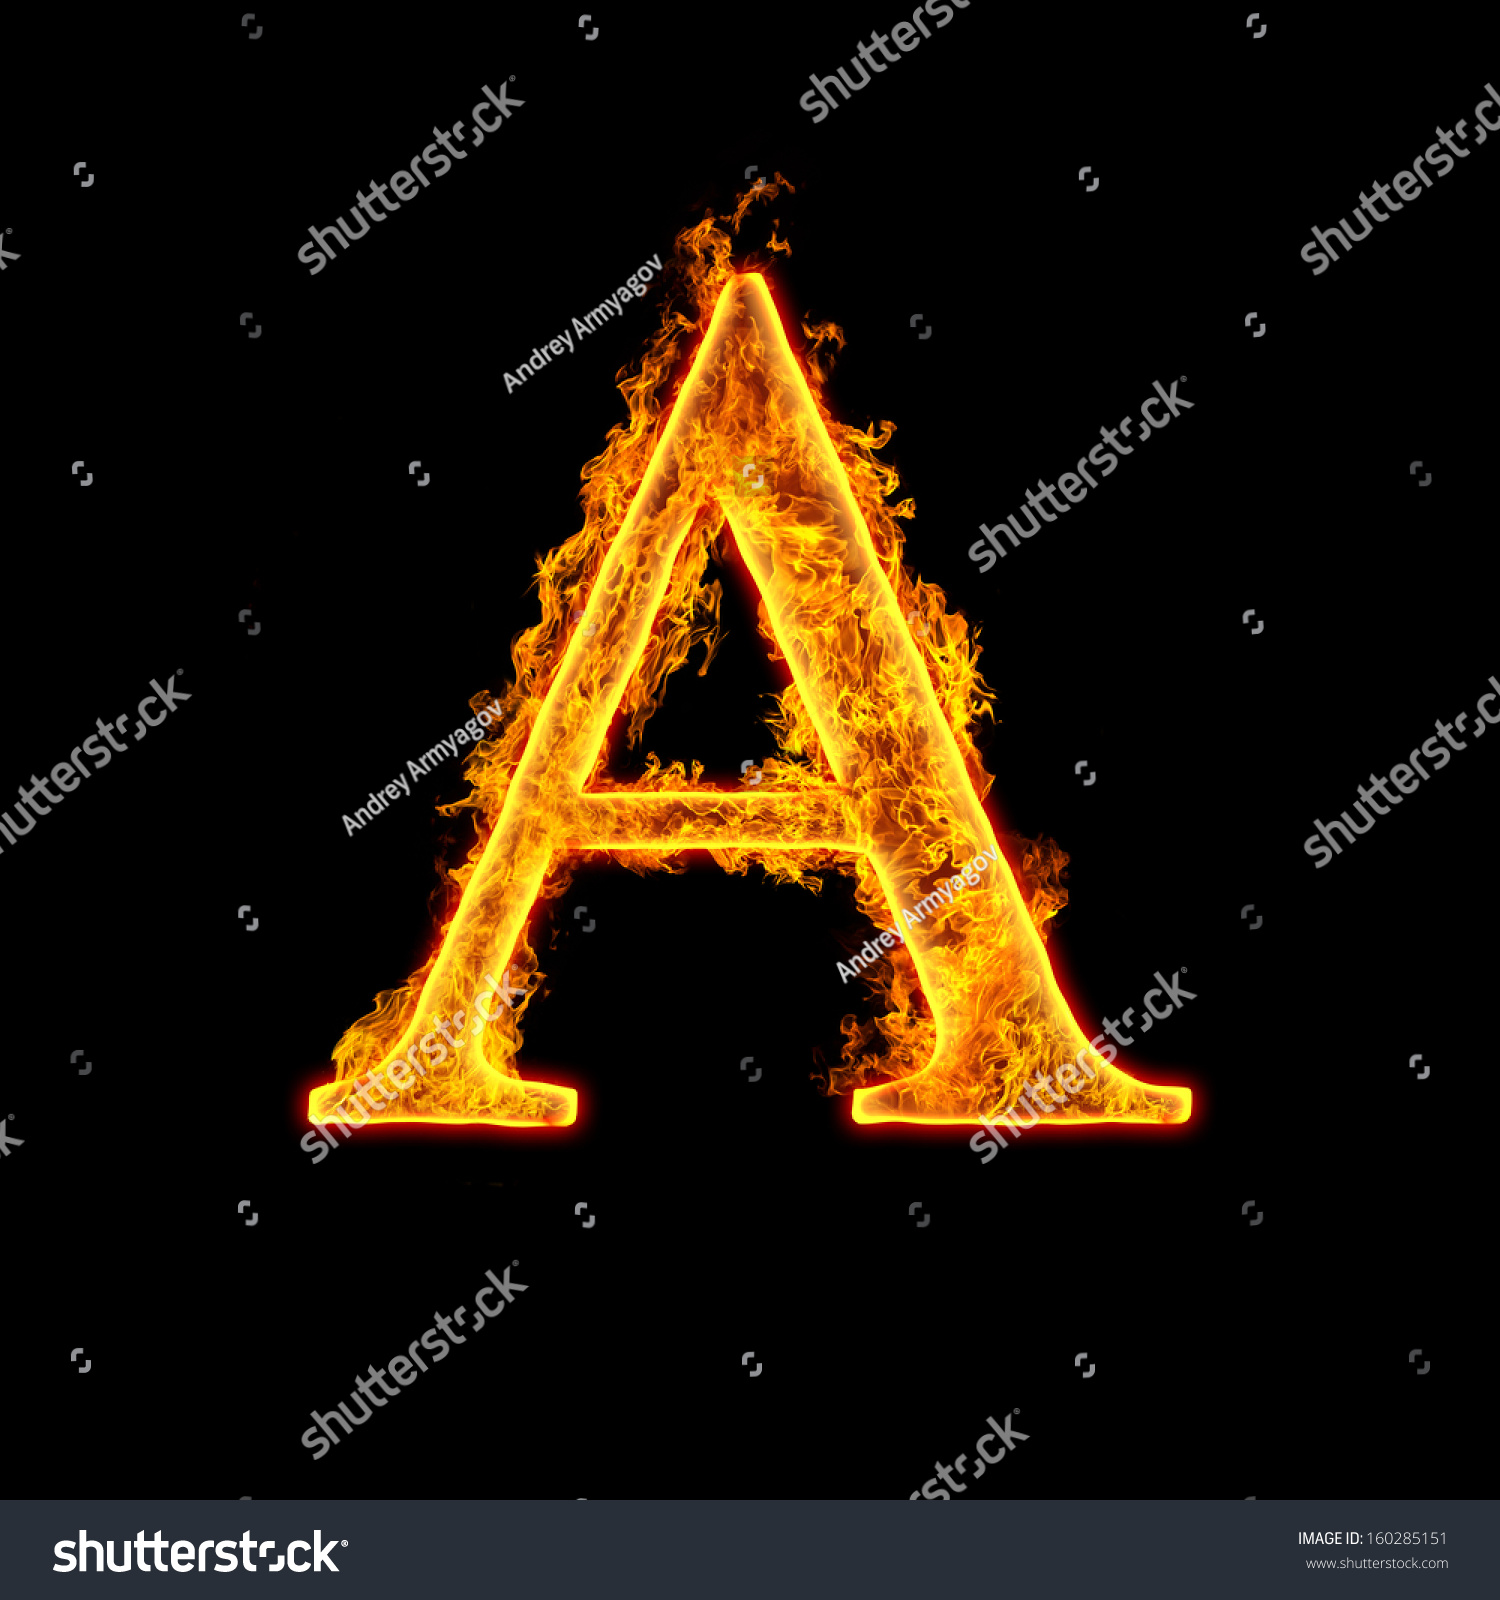 Fire Alphabet Letter Isolated On Black Stock Illustration 160285151 ...